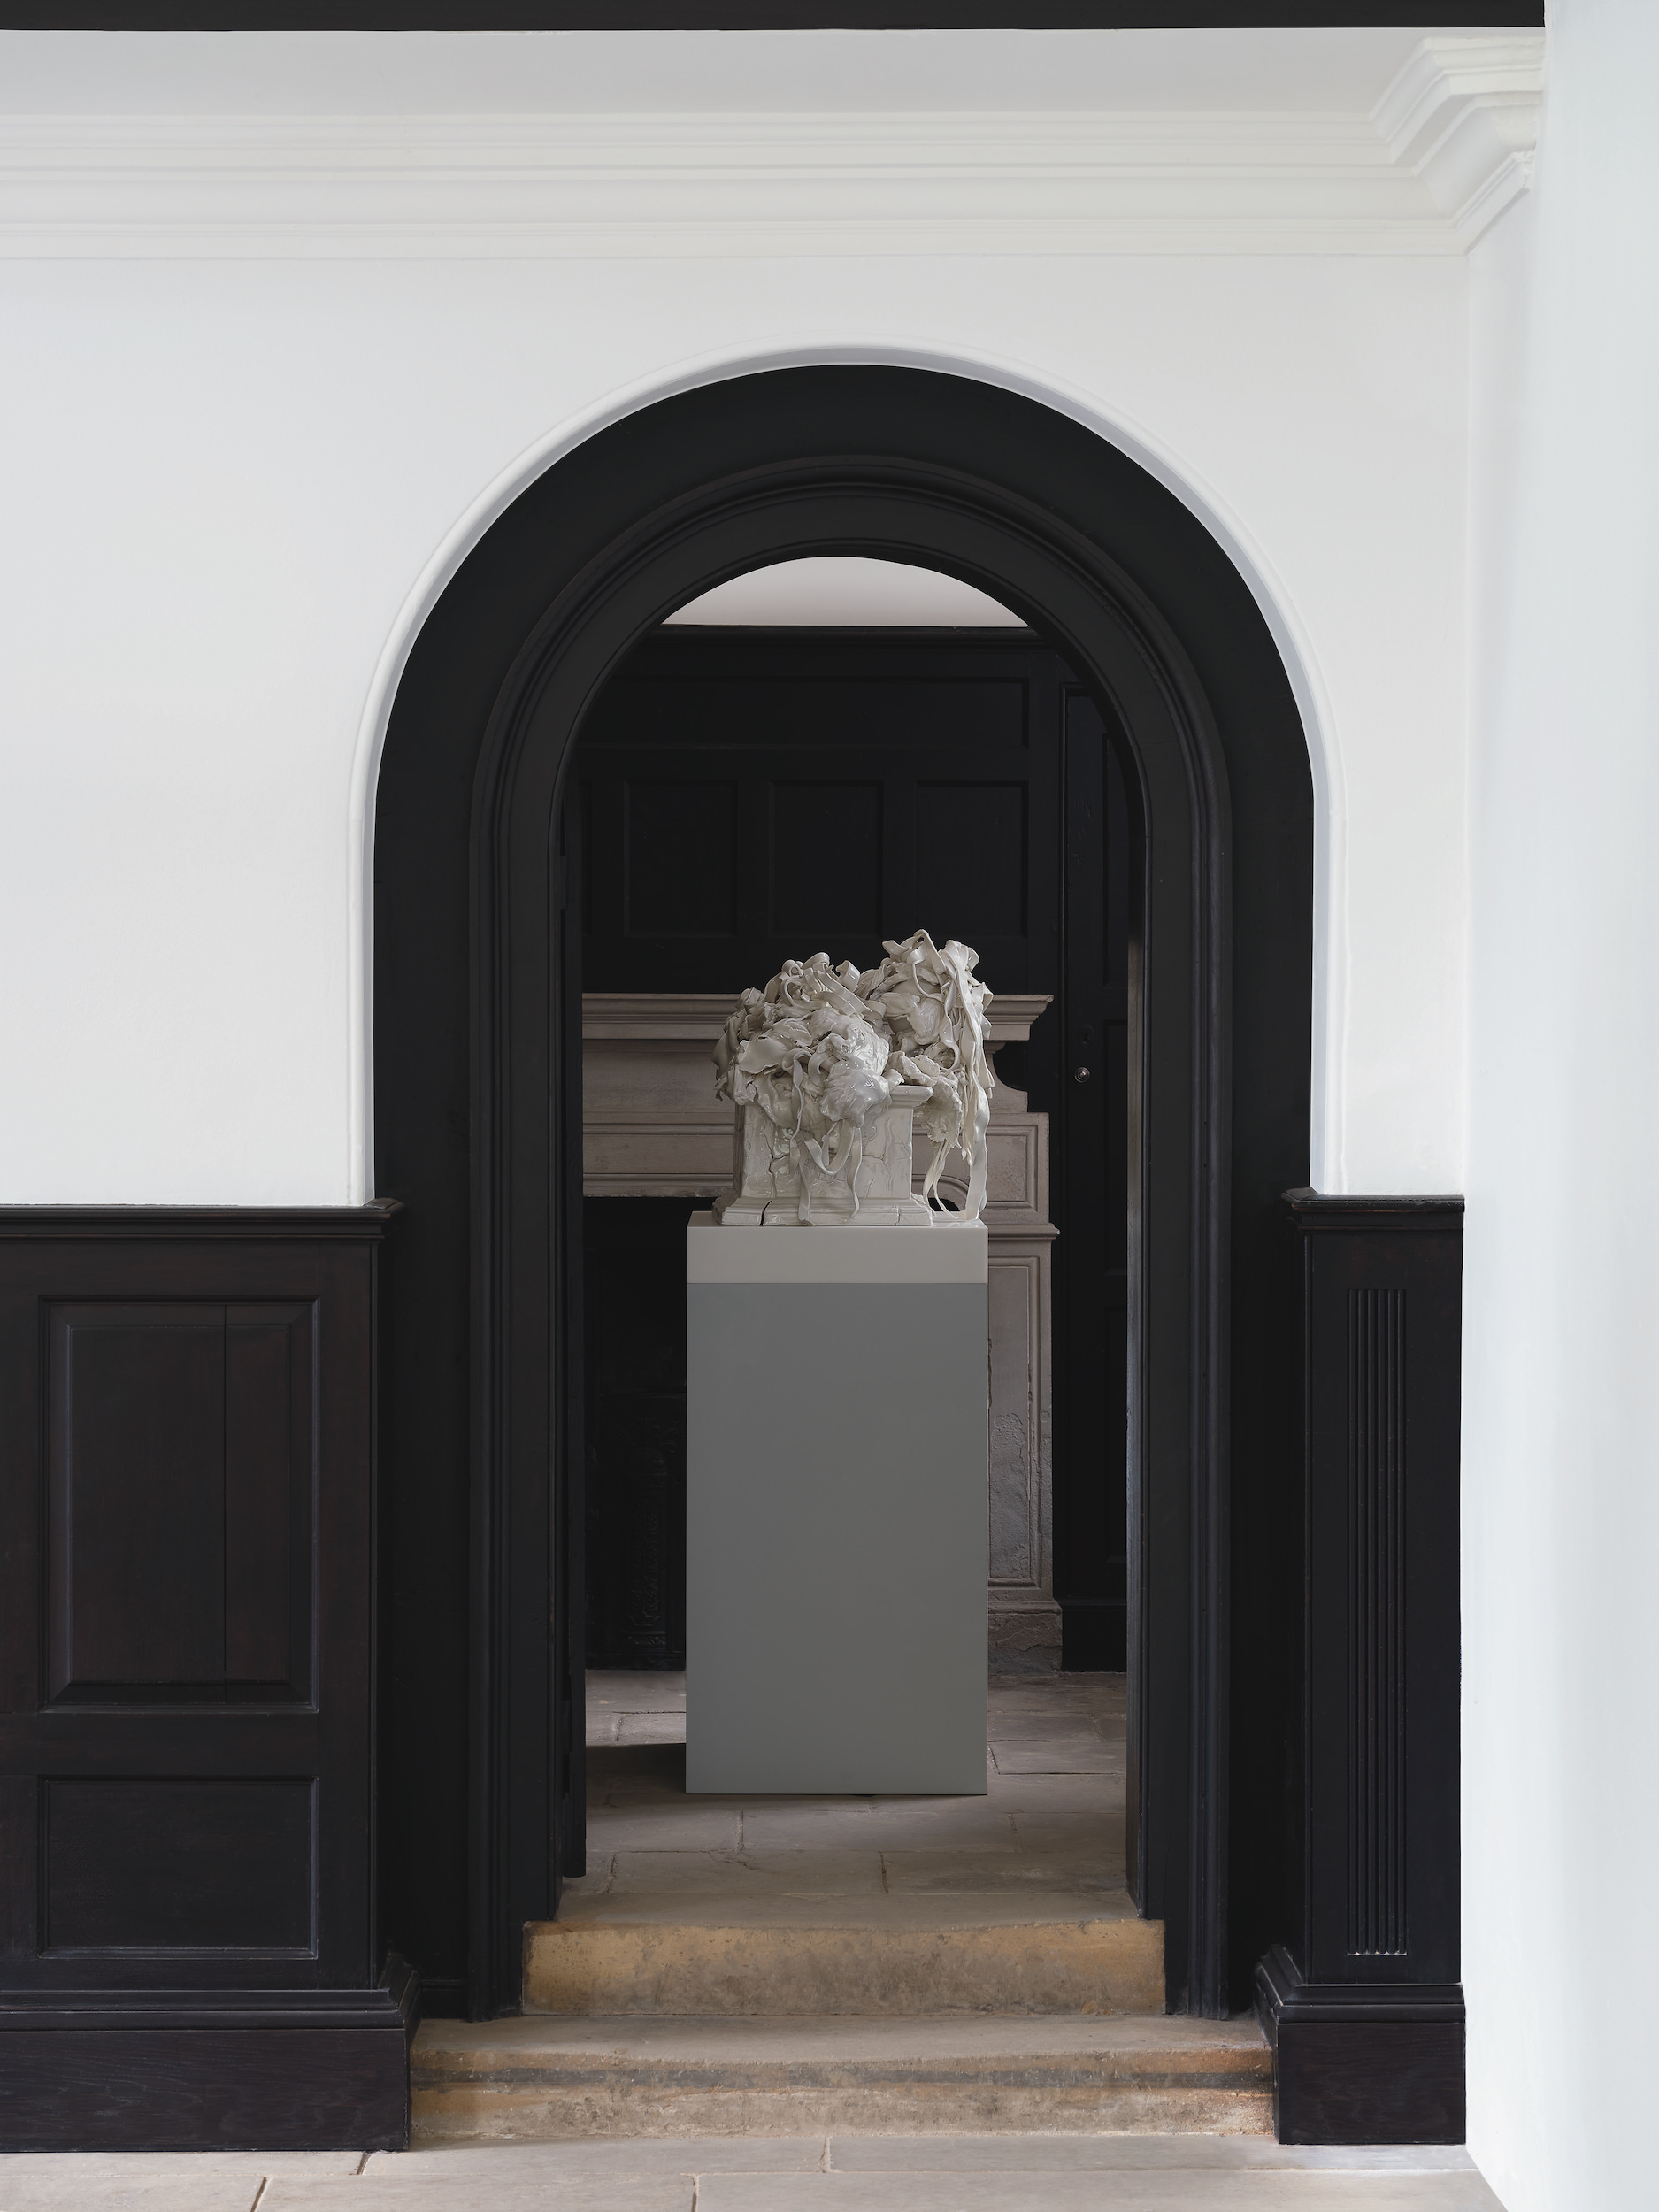 Porcelain sculpture on a plinth, framed by a black arched door way.